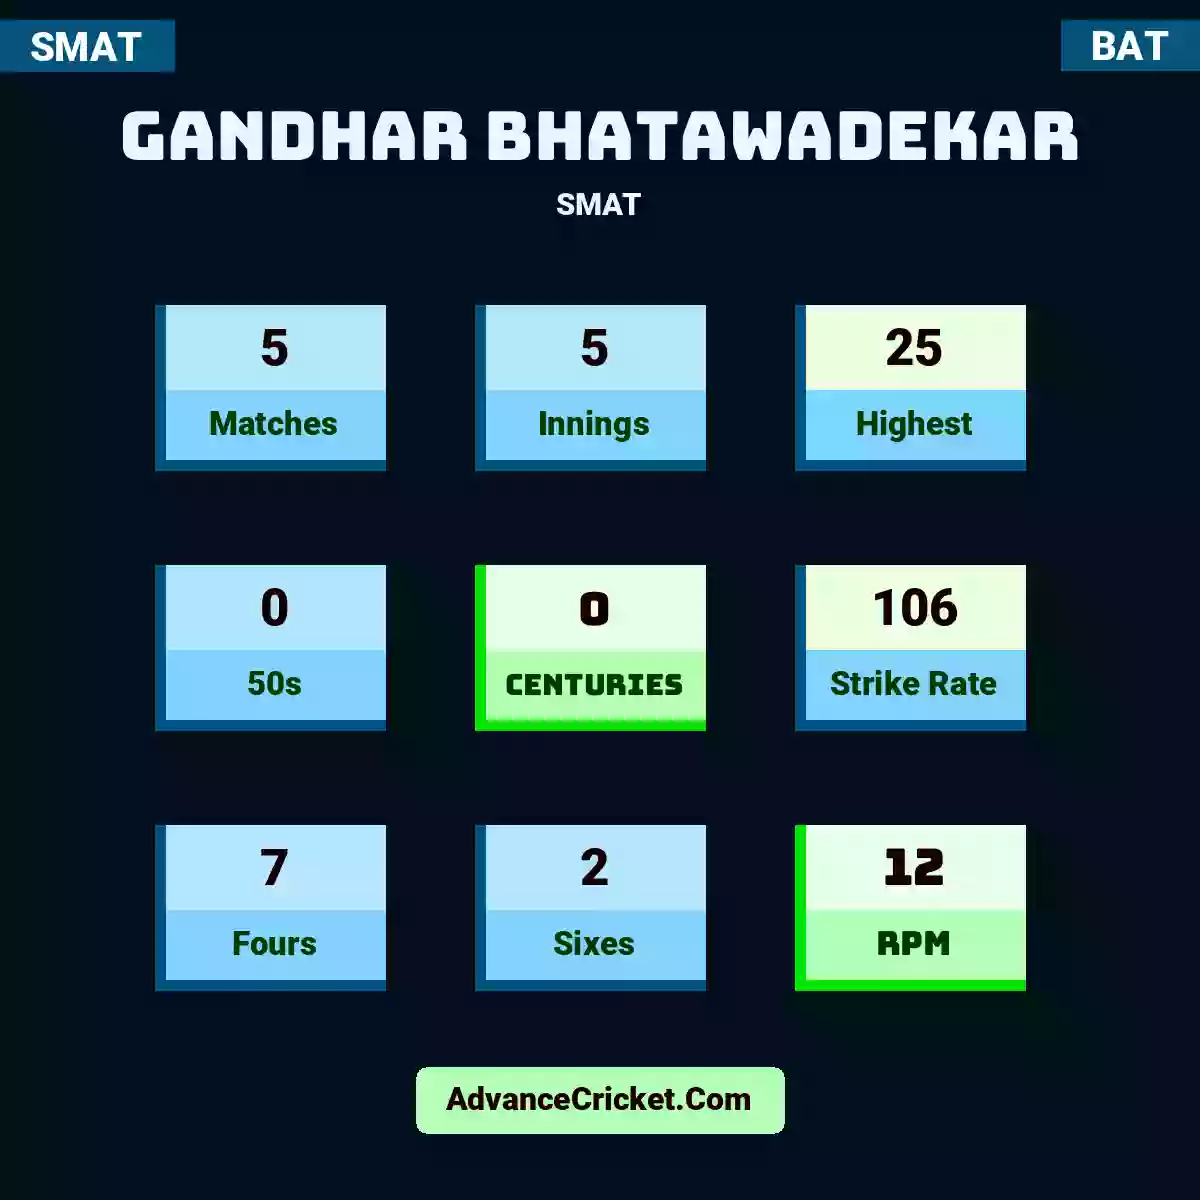 Gandhar Bhatawadekar SMAT , Gandhar Bhatawadekar played 5 matches, scored 25 runs as highest, 0 half-centuries, and 0 centuries, with a strike rate of 106. G.Bhatawadekar hit 7 fours and 2 sixes, with an RPM of 12.